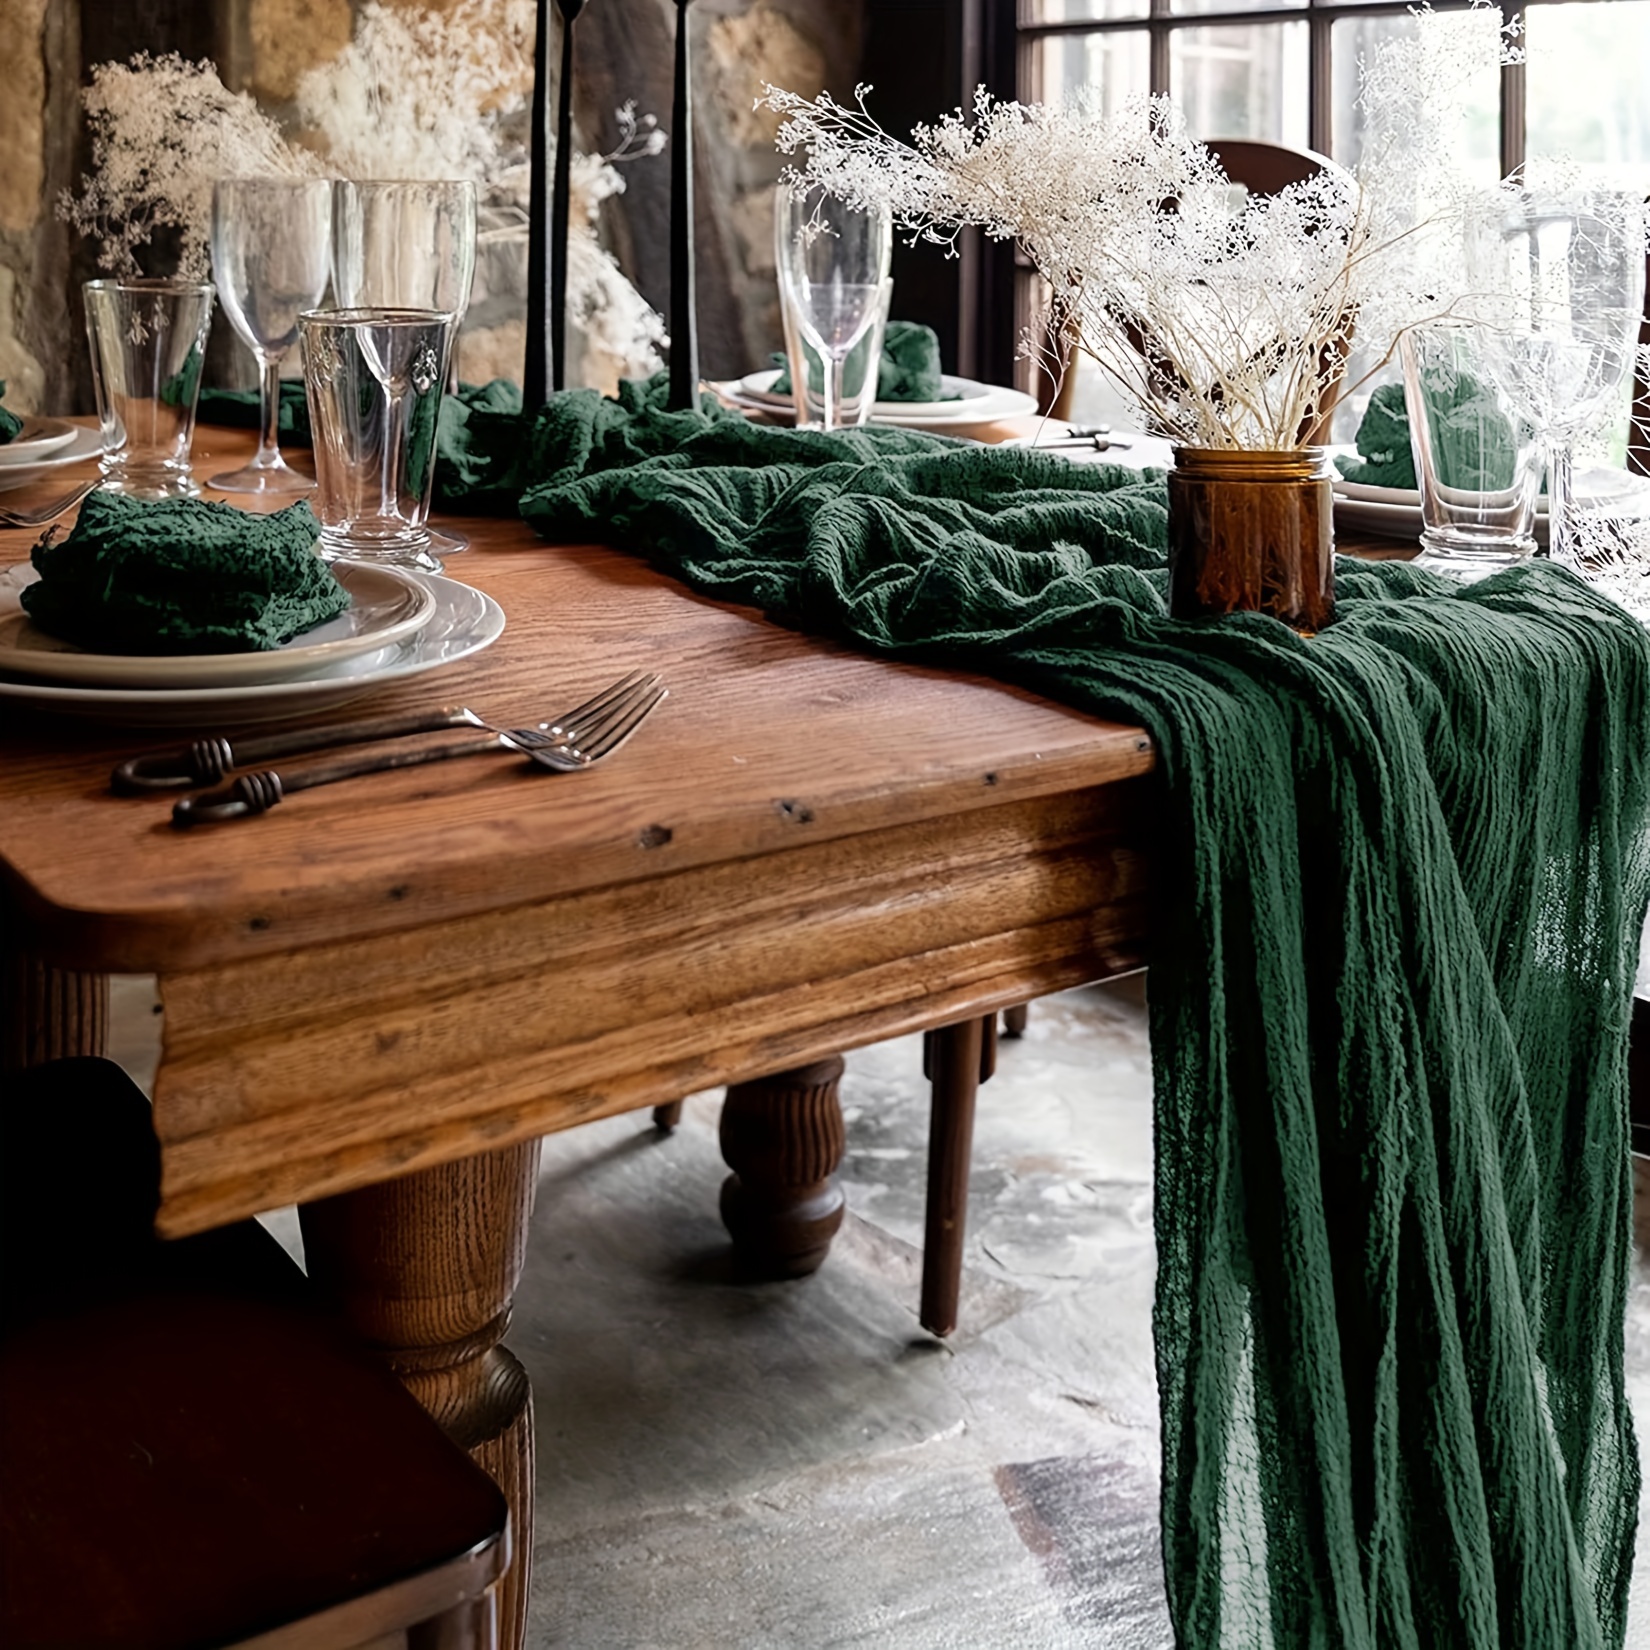 1 pieza Camino de mesa con bordado de flor mesa moderno con bordado diseño  rectángulo para mesa, Moda de Mujer